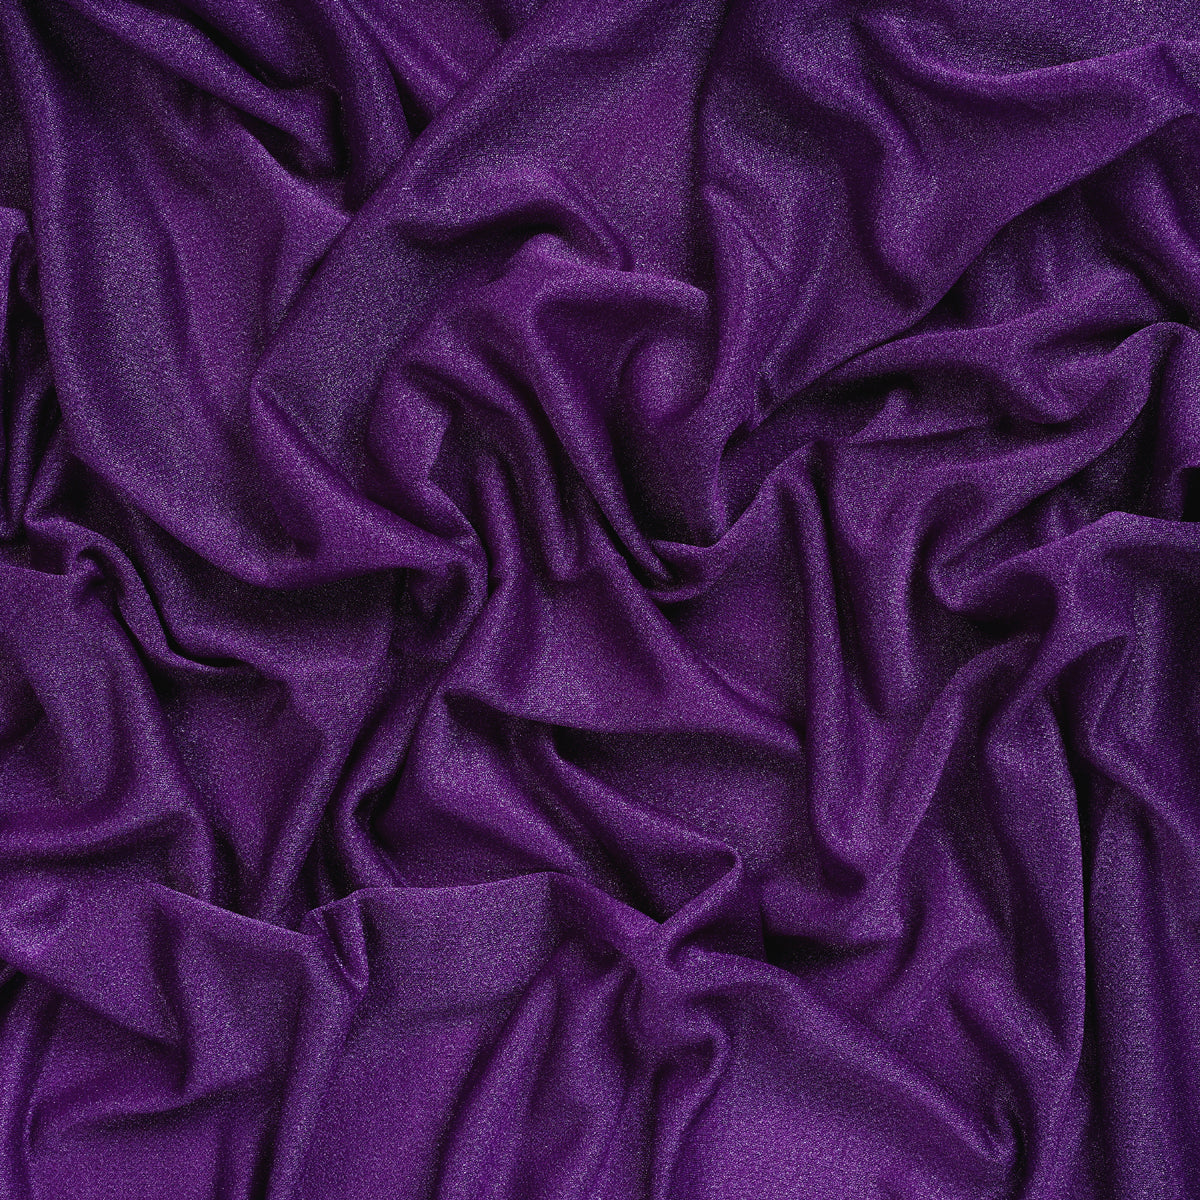 Purple,a6c5058f-f256-4e4c-a1c5-4019f66c04c6